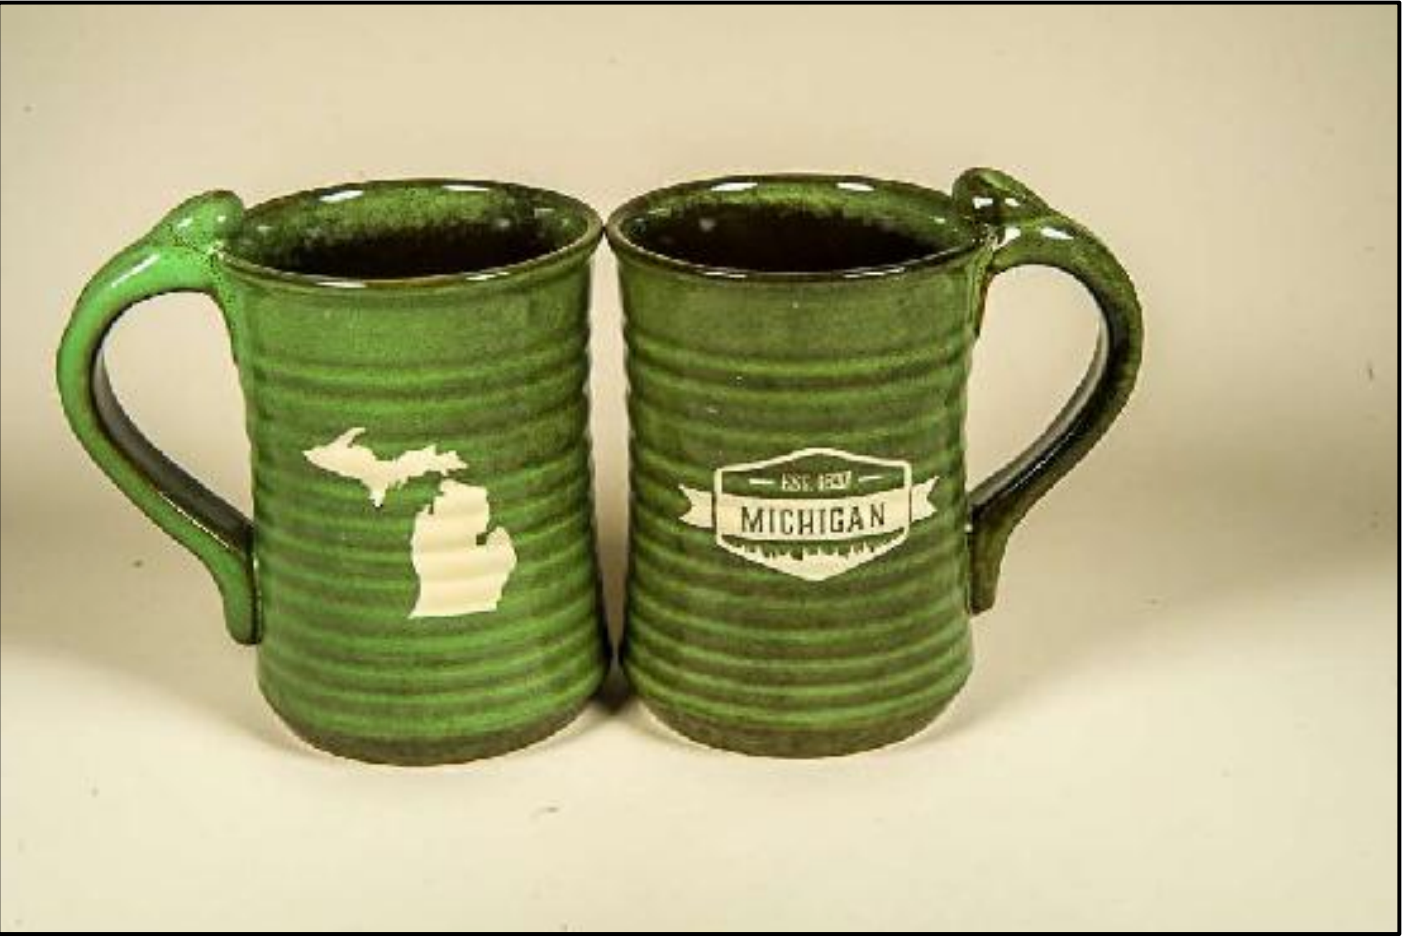 Michigan Ceramic Thrown EST 1817 Mug